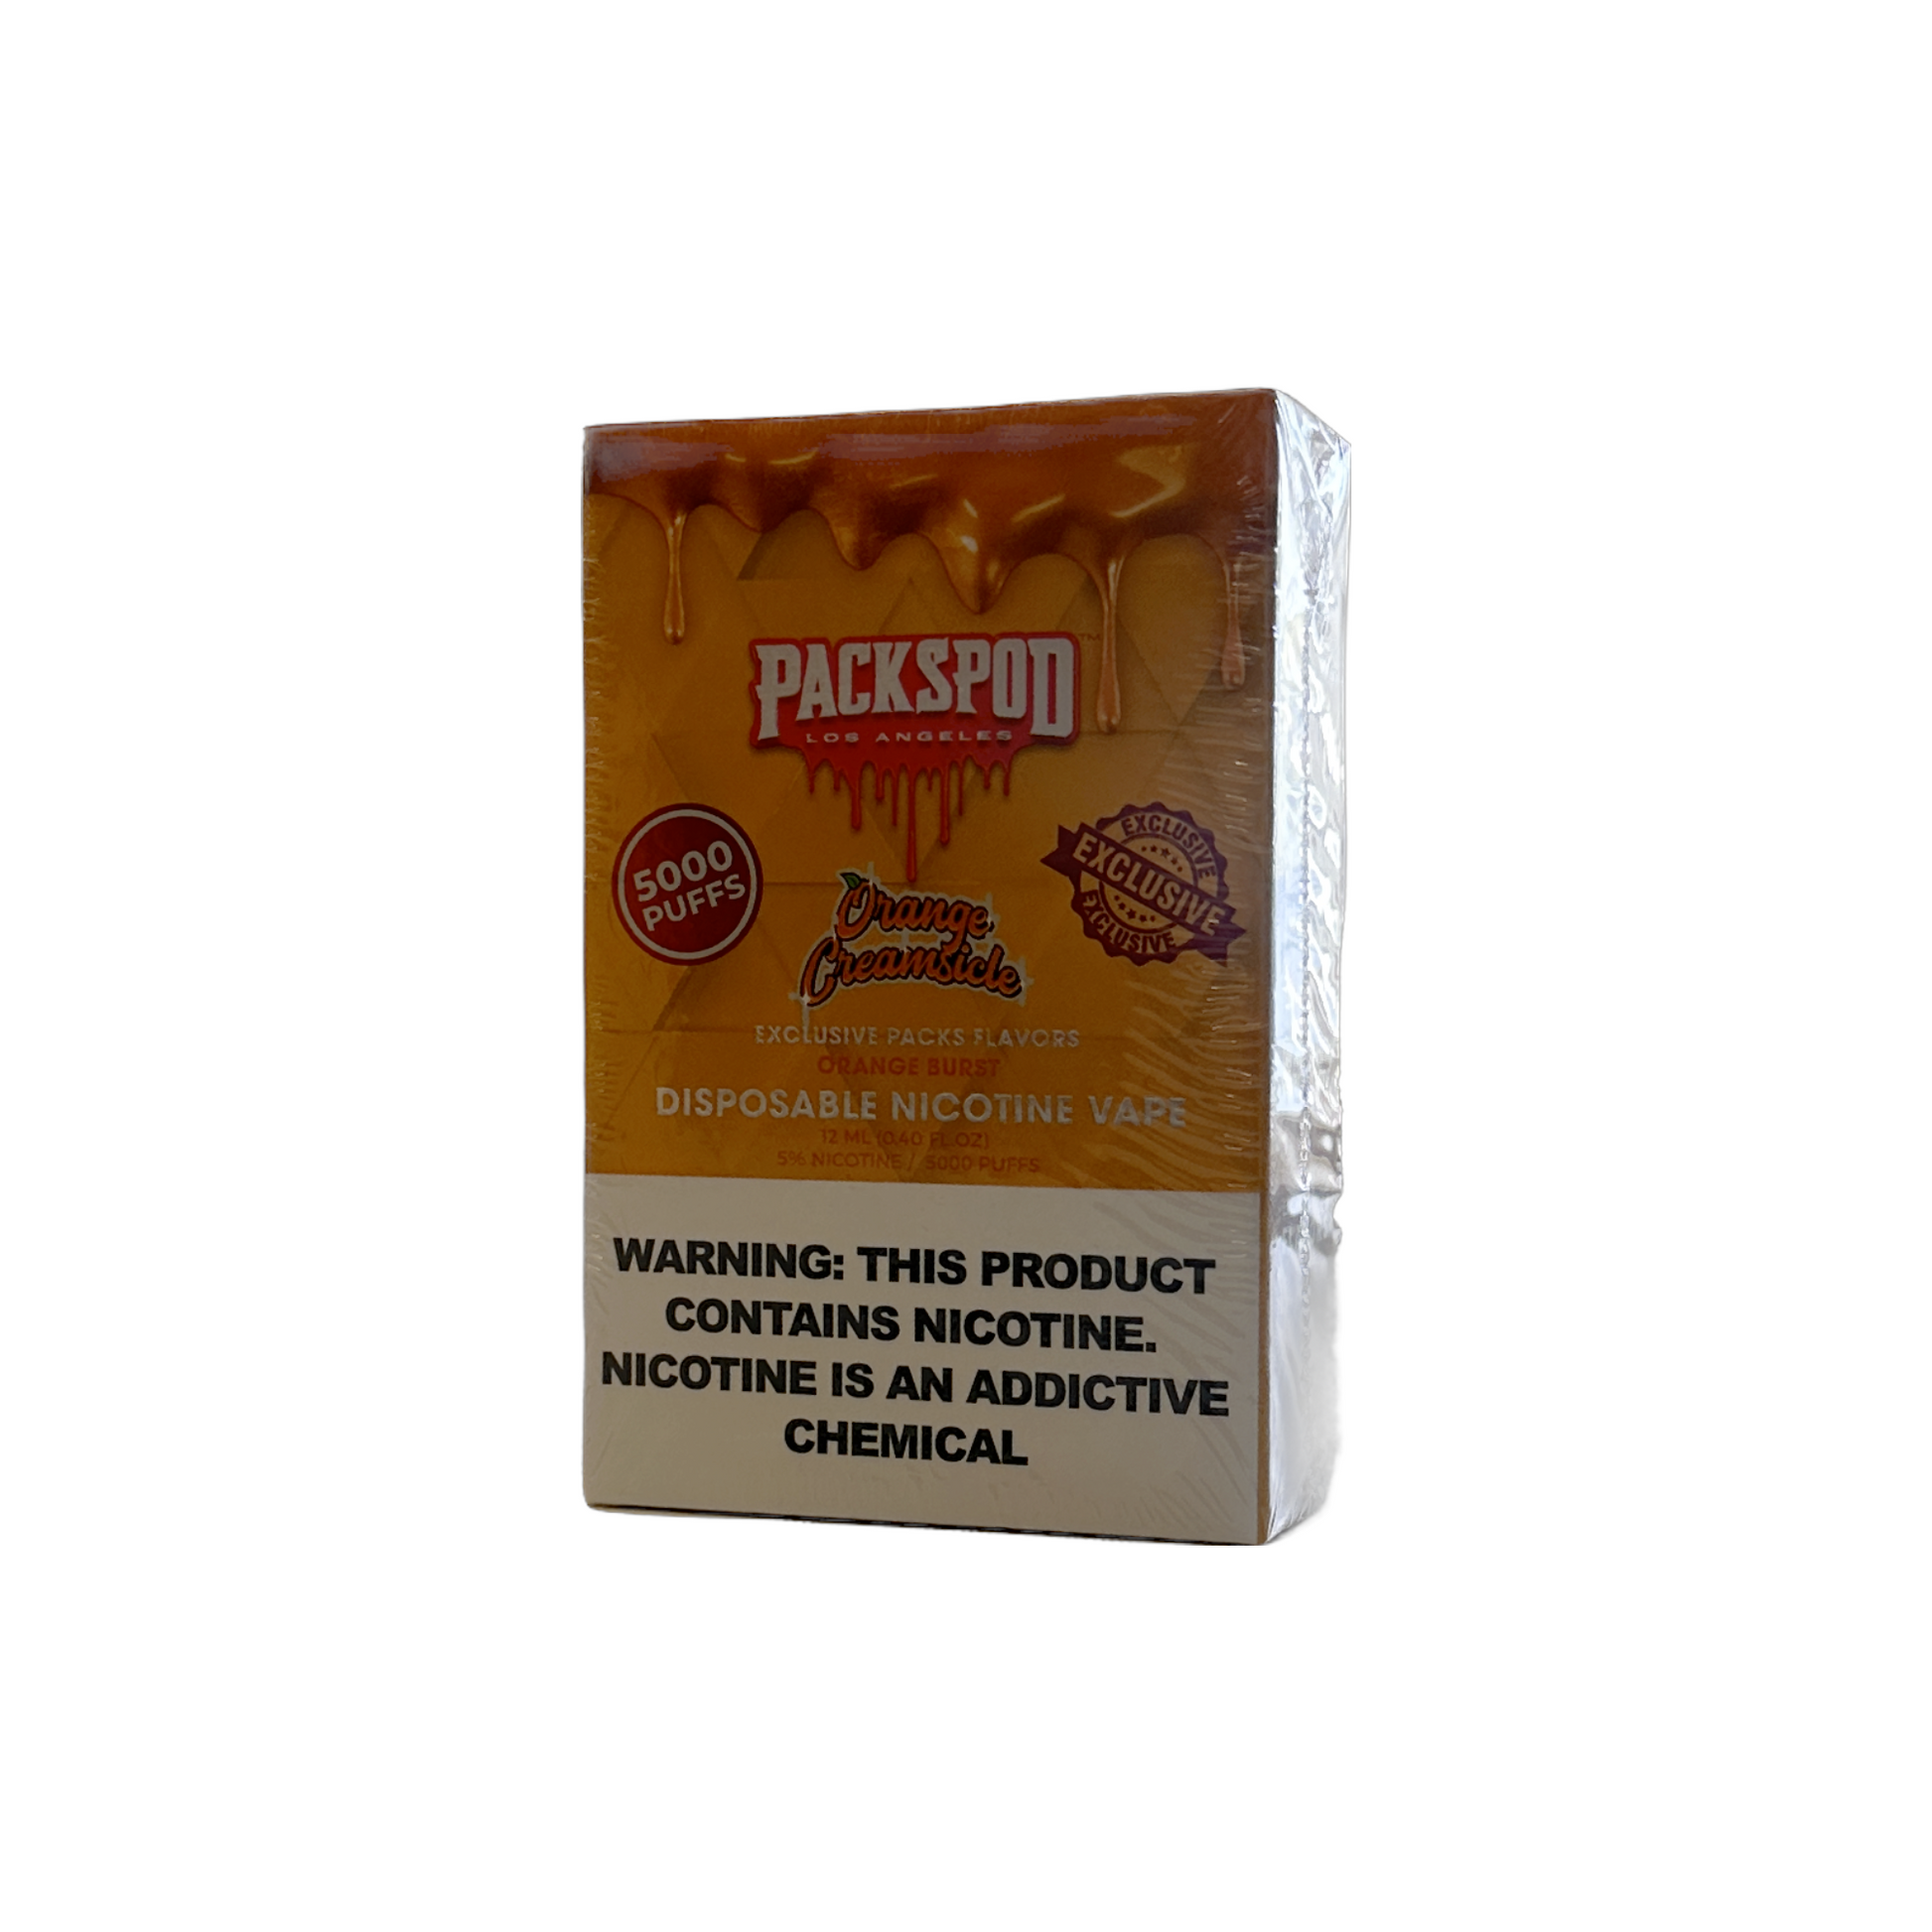 Packspod Disposable Vape 5000 Puffs - Orange Creamsicle